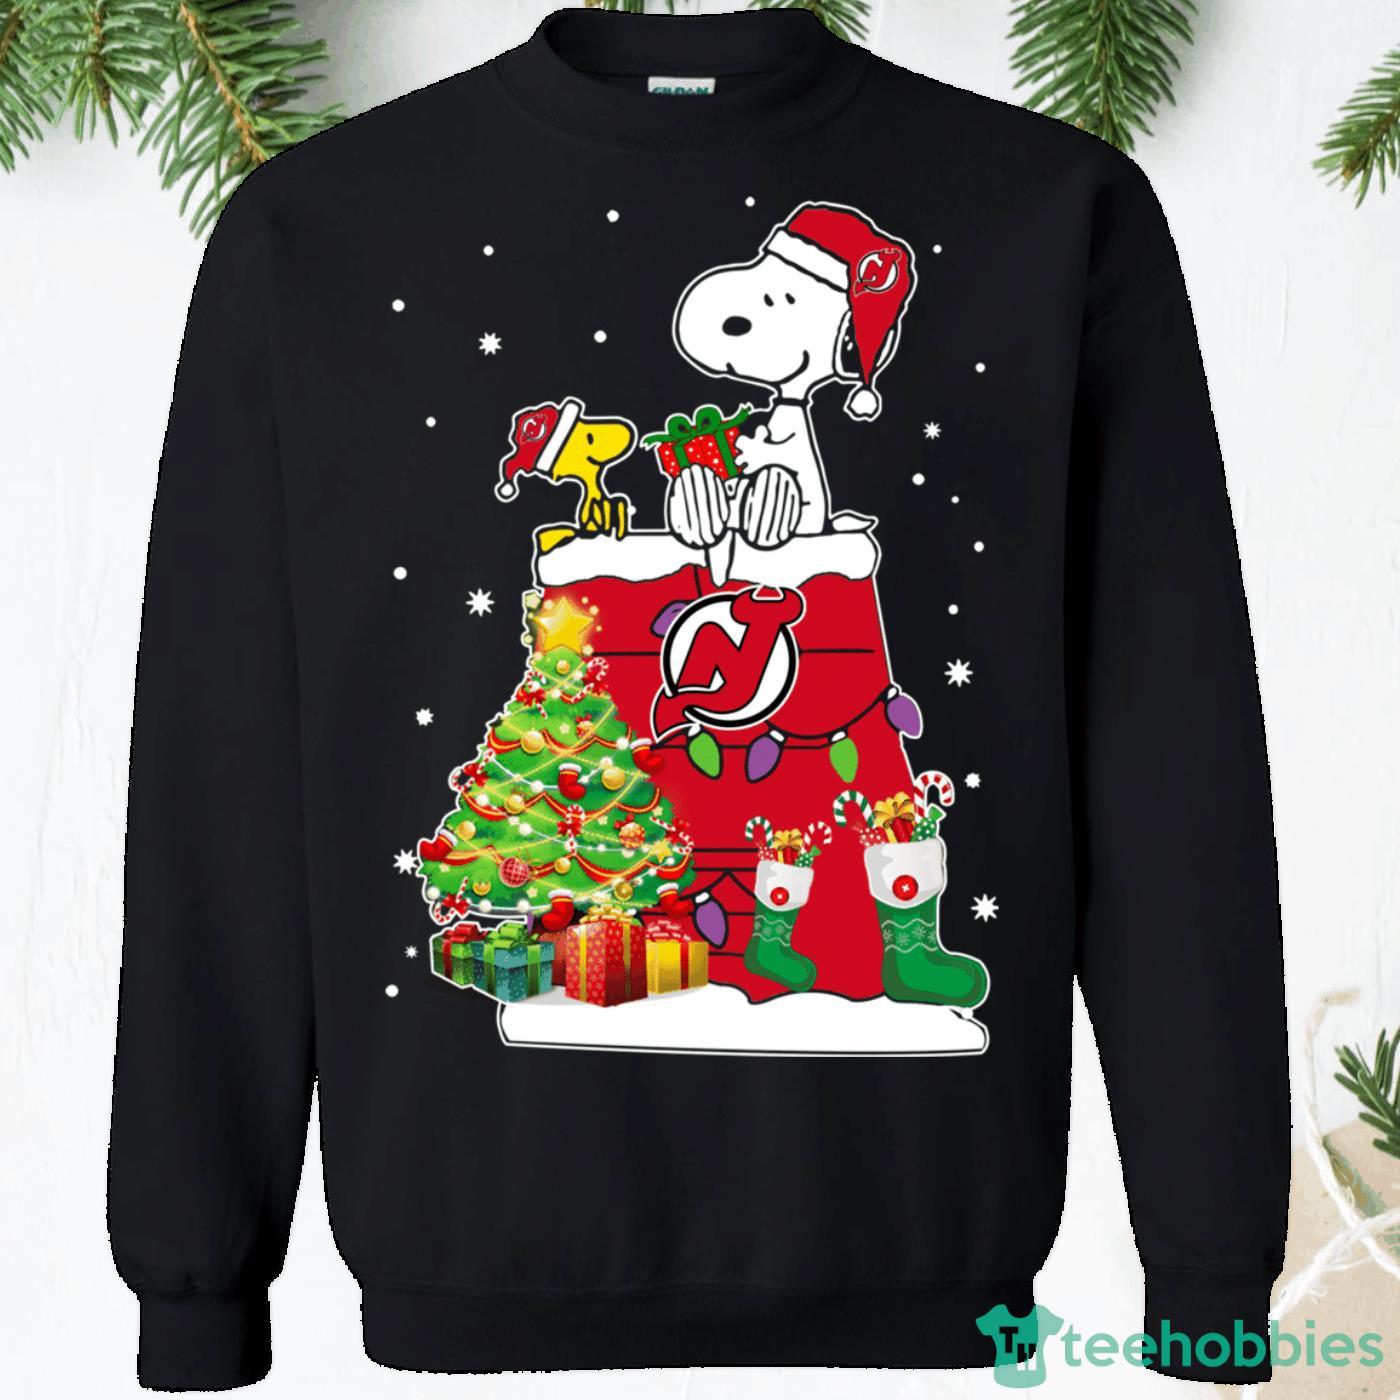 Christmas Gnomes New Jersey Devils Ugly Sweatshirt Christmas 3d Fleece Bomber  Jacket - Teeruto